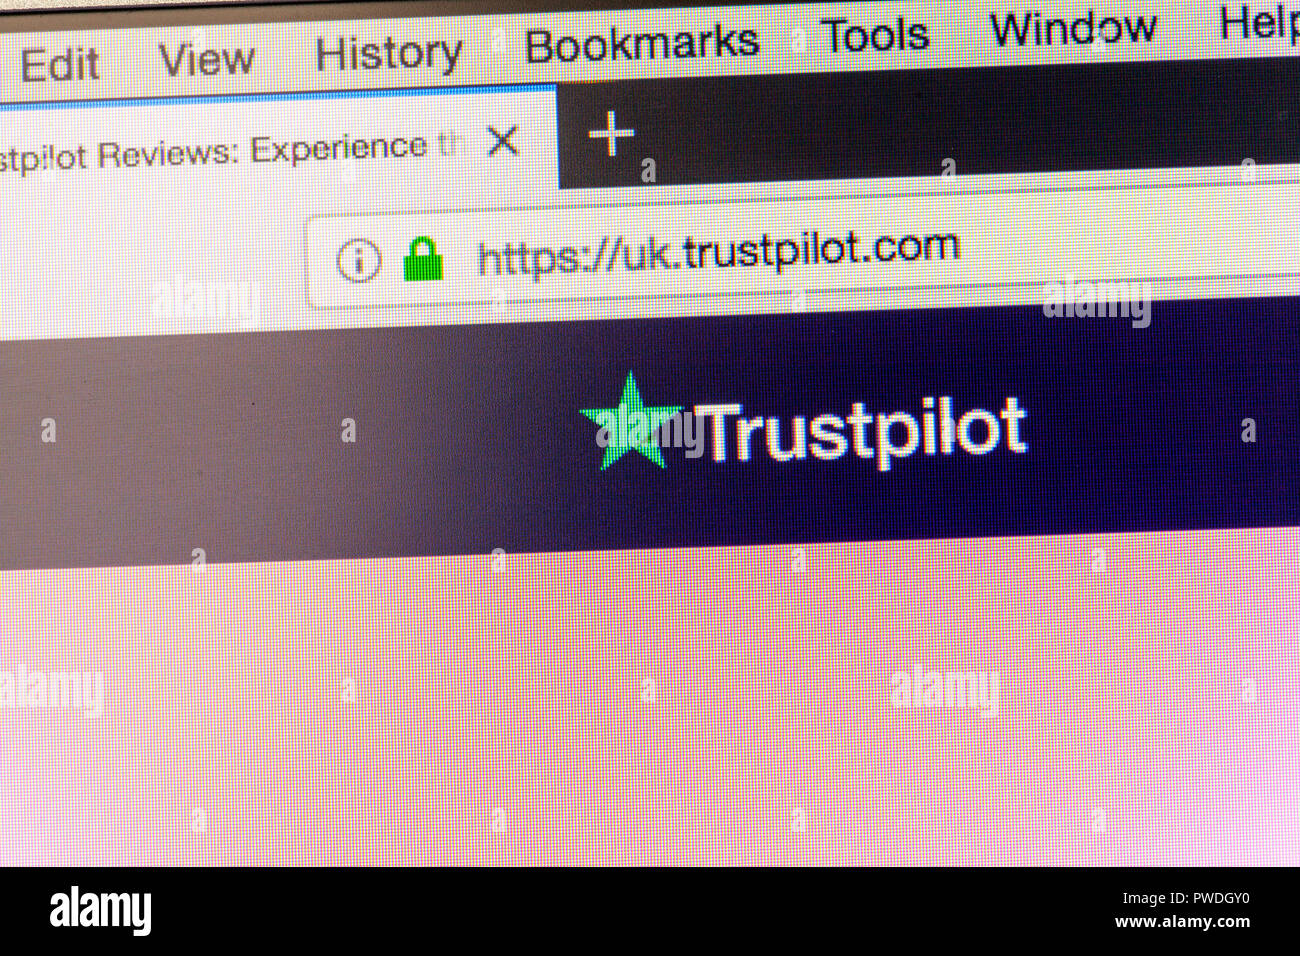 Trustpilot, reviews for online businesses, Trustpilot business review website, Trustpilot  website, Trustpilot logo, Trustpilot homepage, Trustpilot Stock Photo